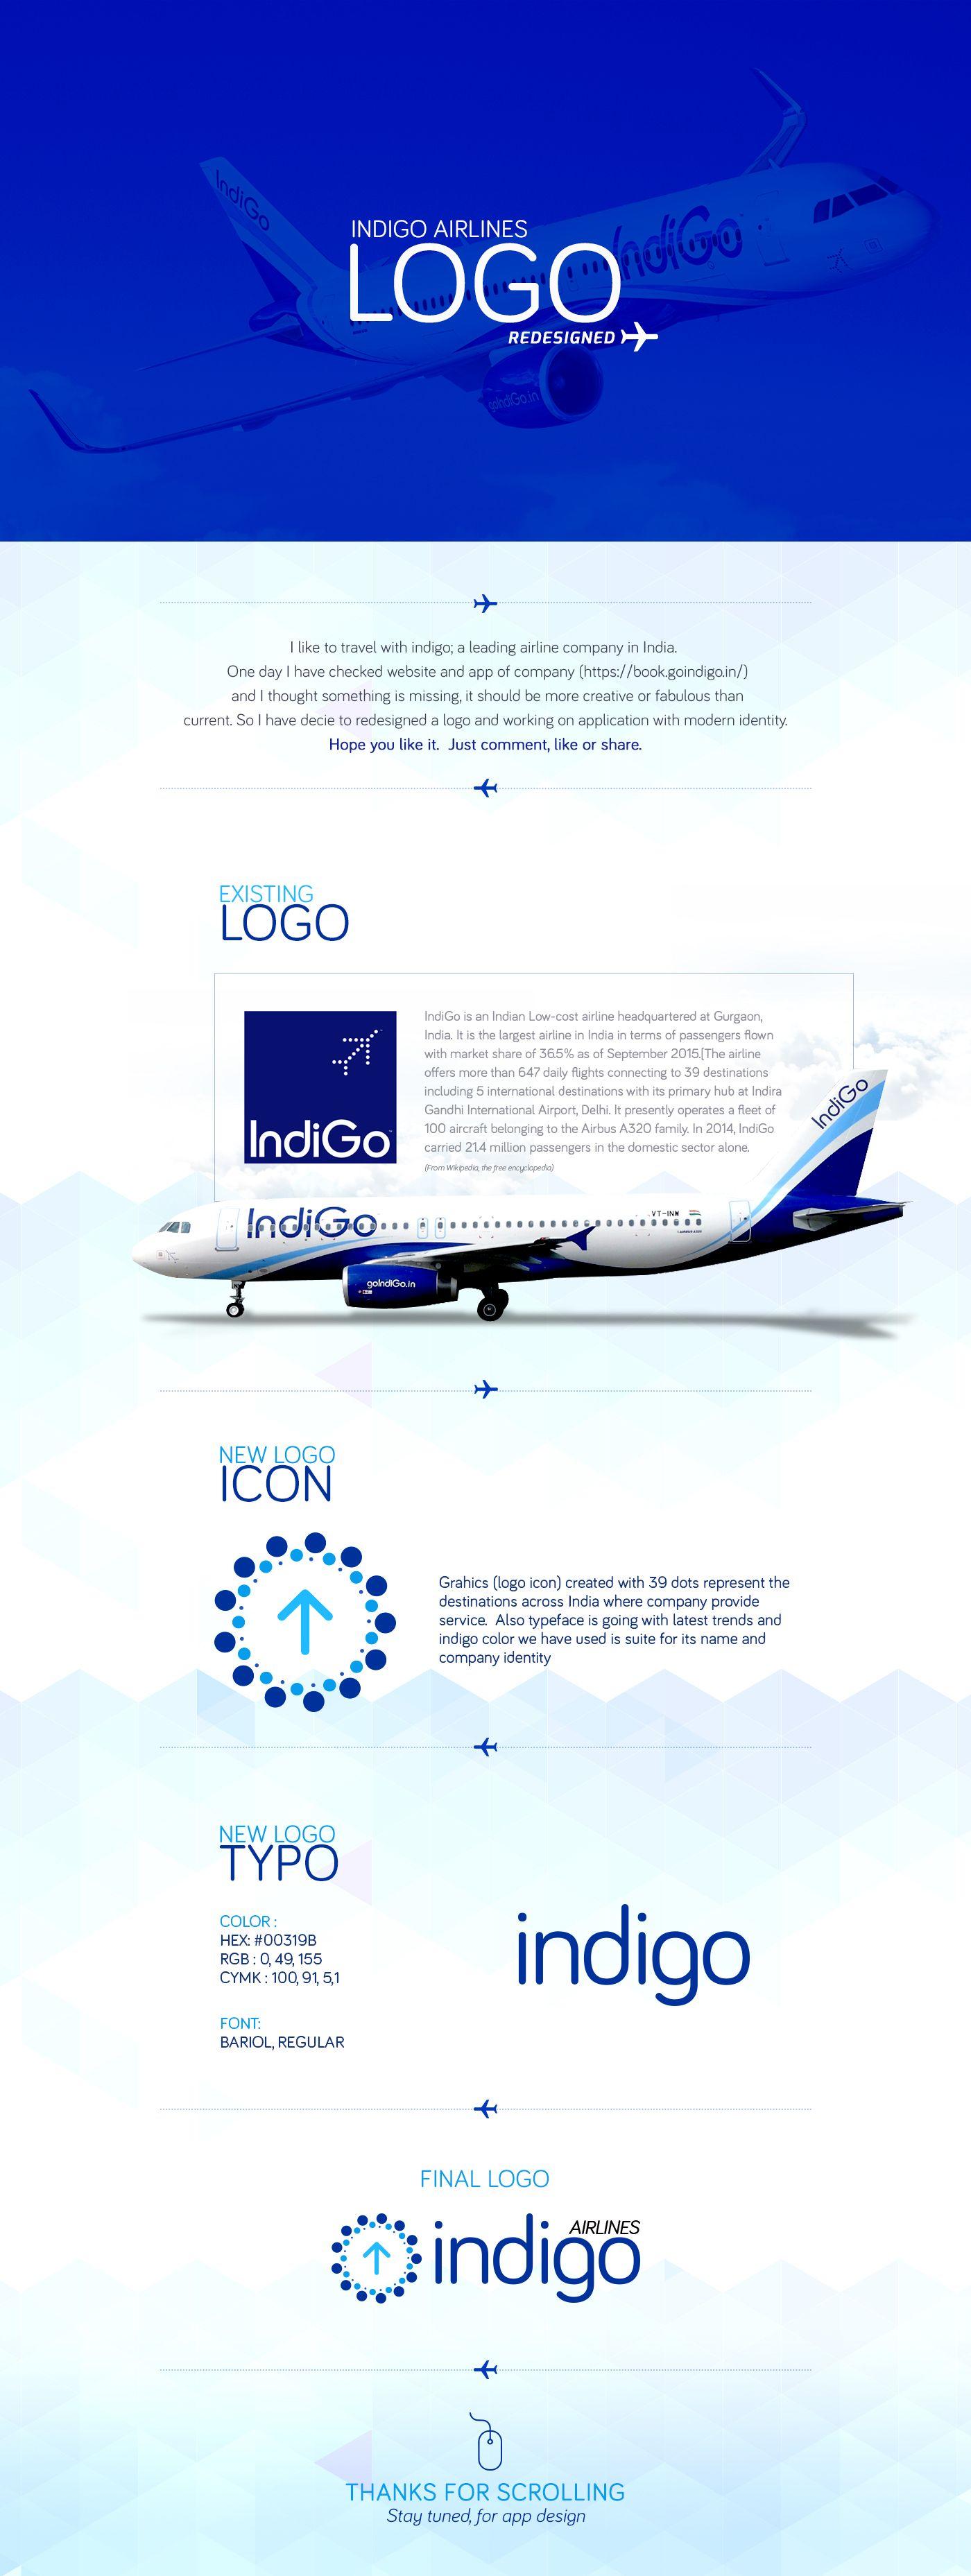 Leading Airline Logo - Indigo Airlines LOGO Redesigned